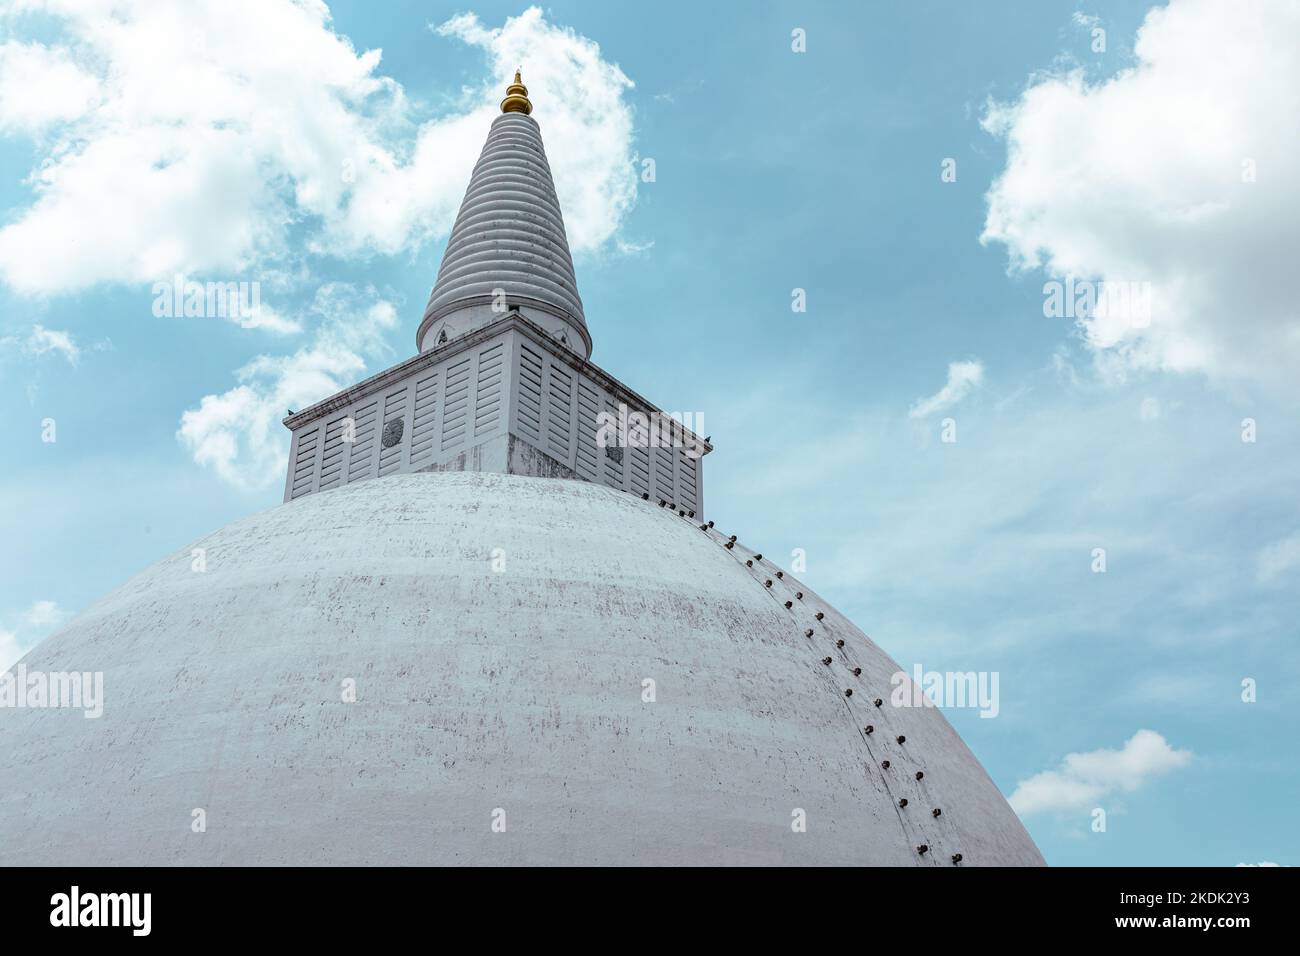 Ruwanweliseya Dagoba stupa budista y lugar de peregrinación. Anuradhapura, Sri Lanka. Foto de stock